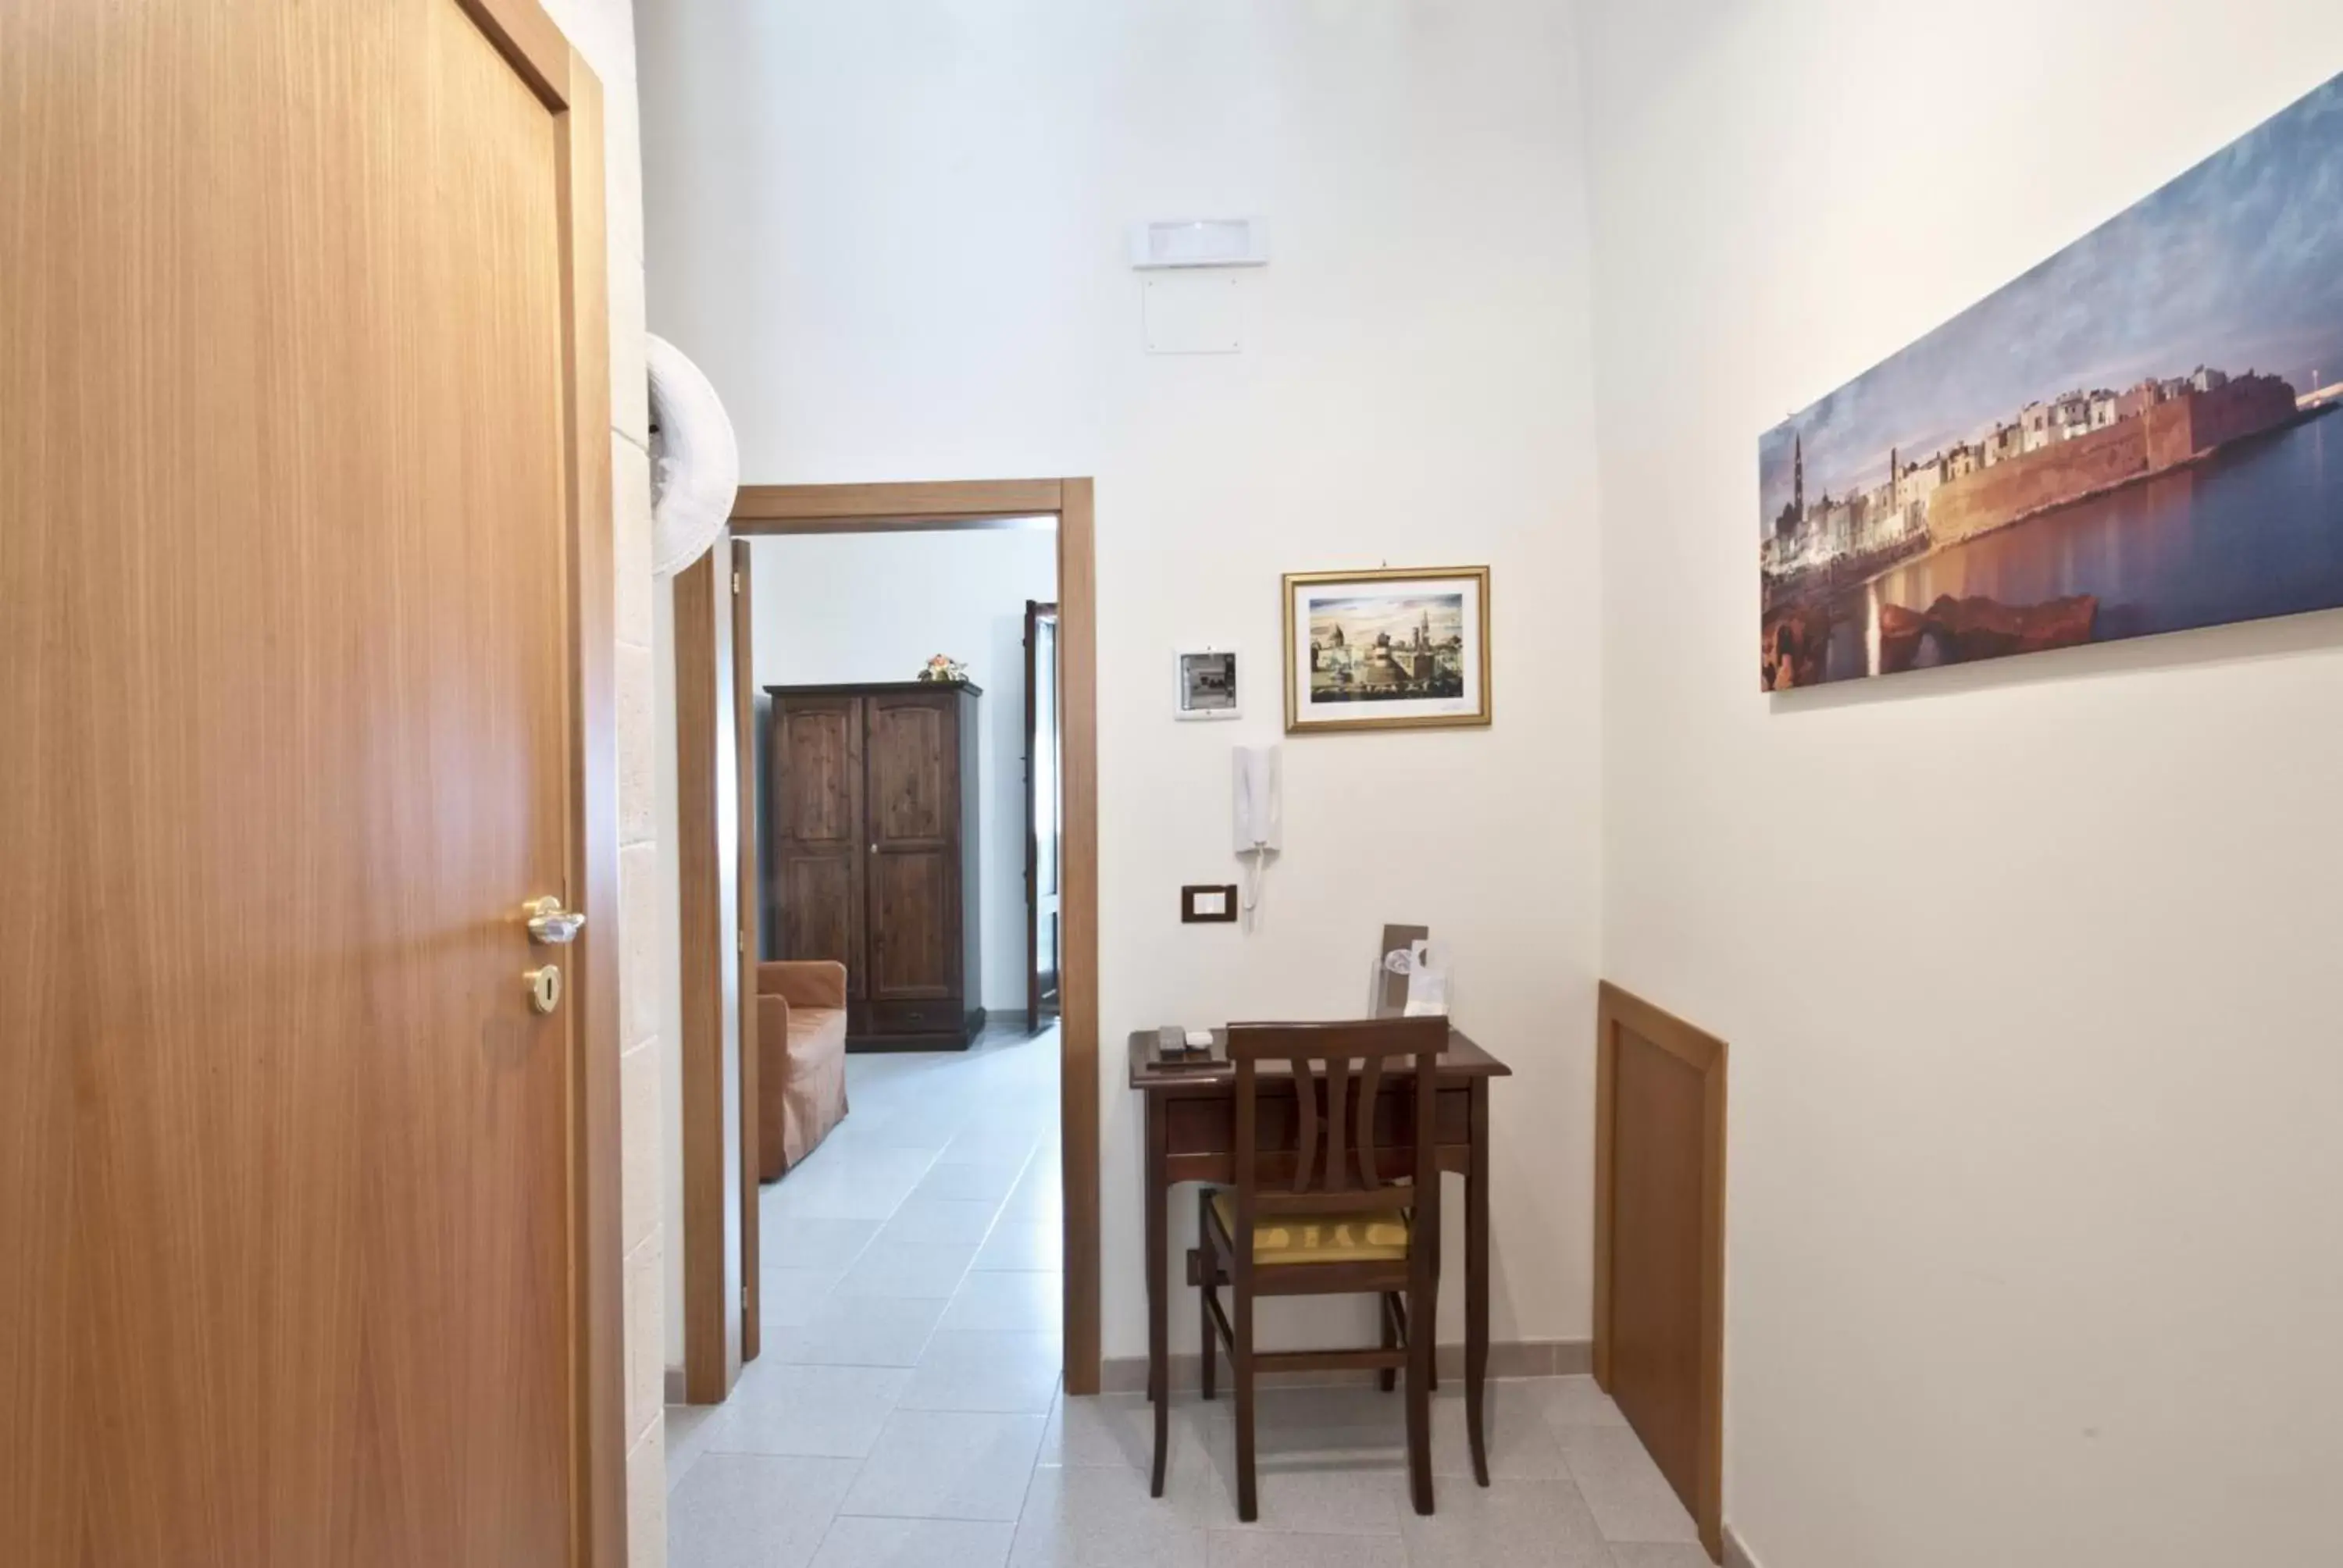 Photo of the whole room, Dining Area in B&B Casa Cimino - Monopoli - Puglia